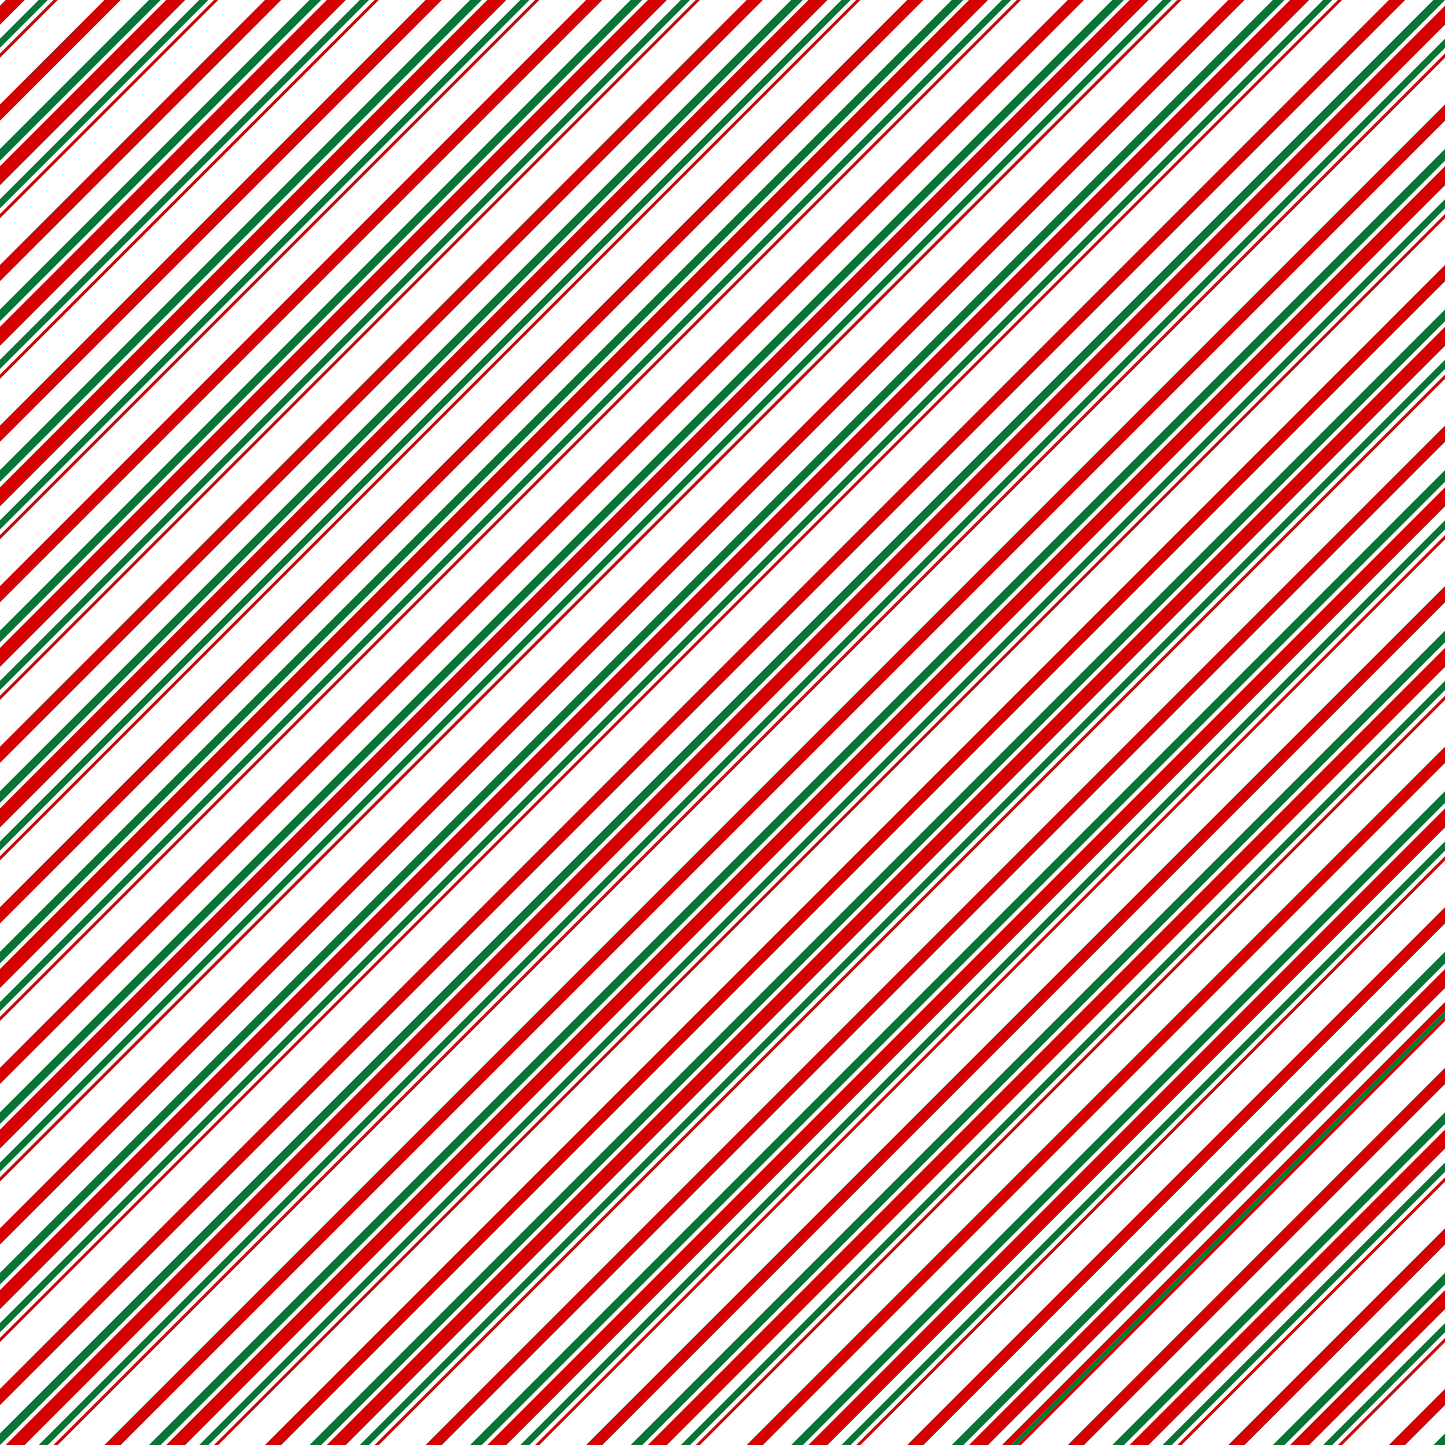 Candy Cane Stripes - Rayures rouges et vertes 014